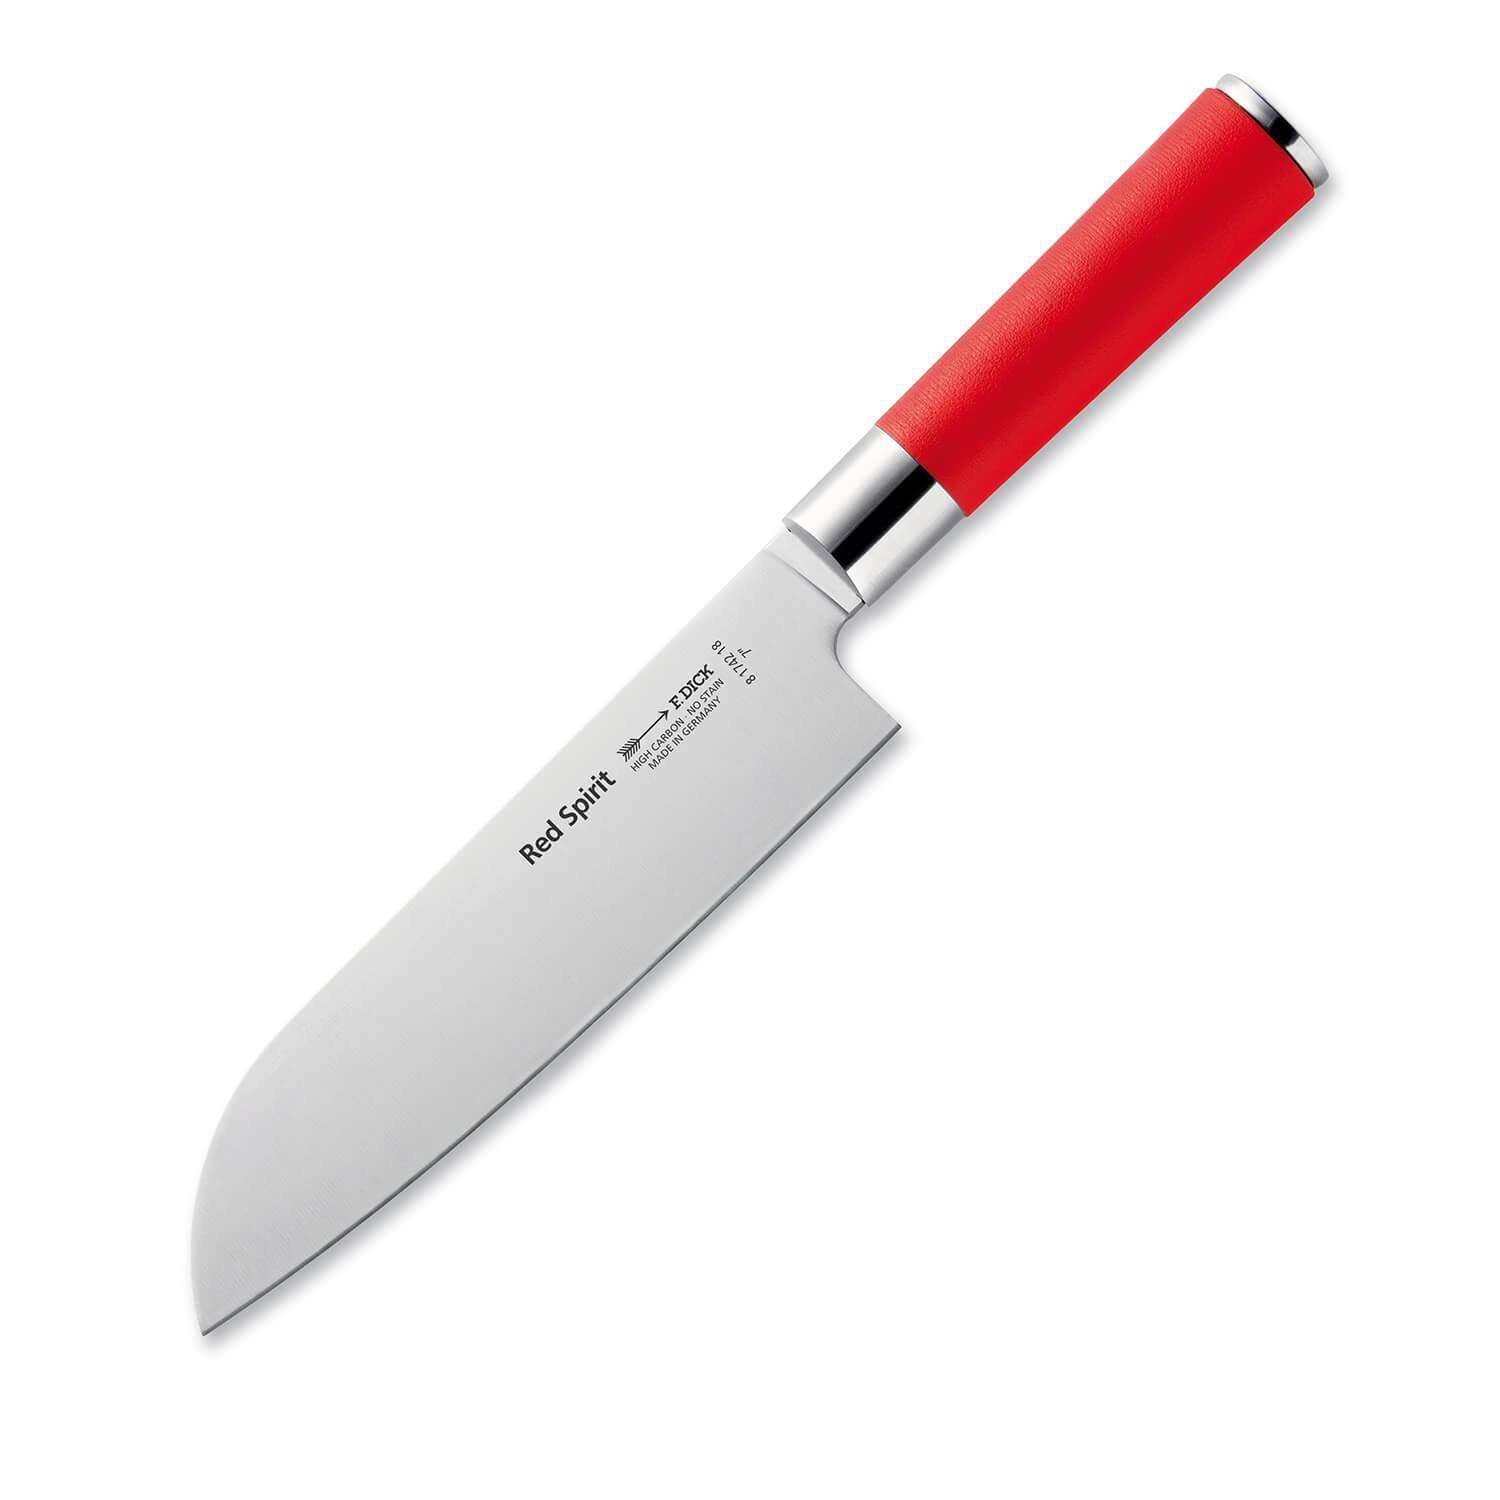 Ножи dick. Нож сантоку 18 см. X55crmo14 сантоку -Victorinox. F dick ножи Red. Нож азиатский поварской.